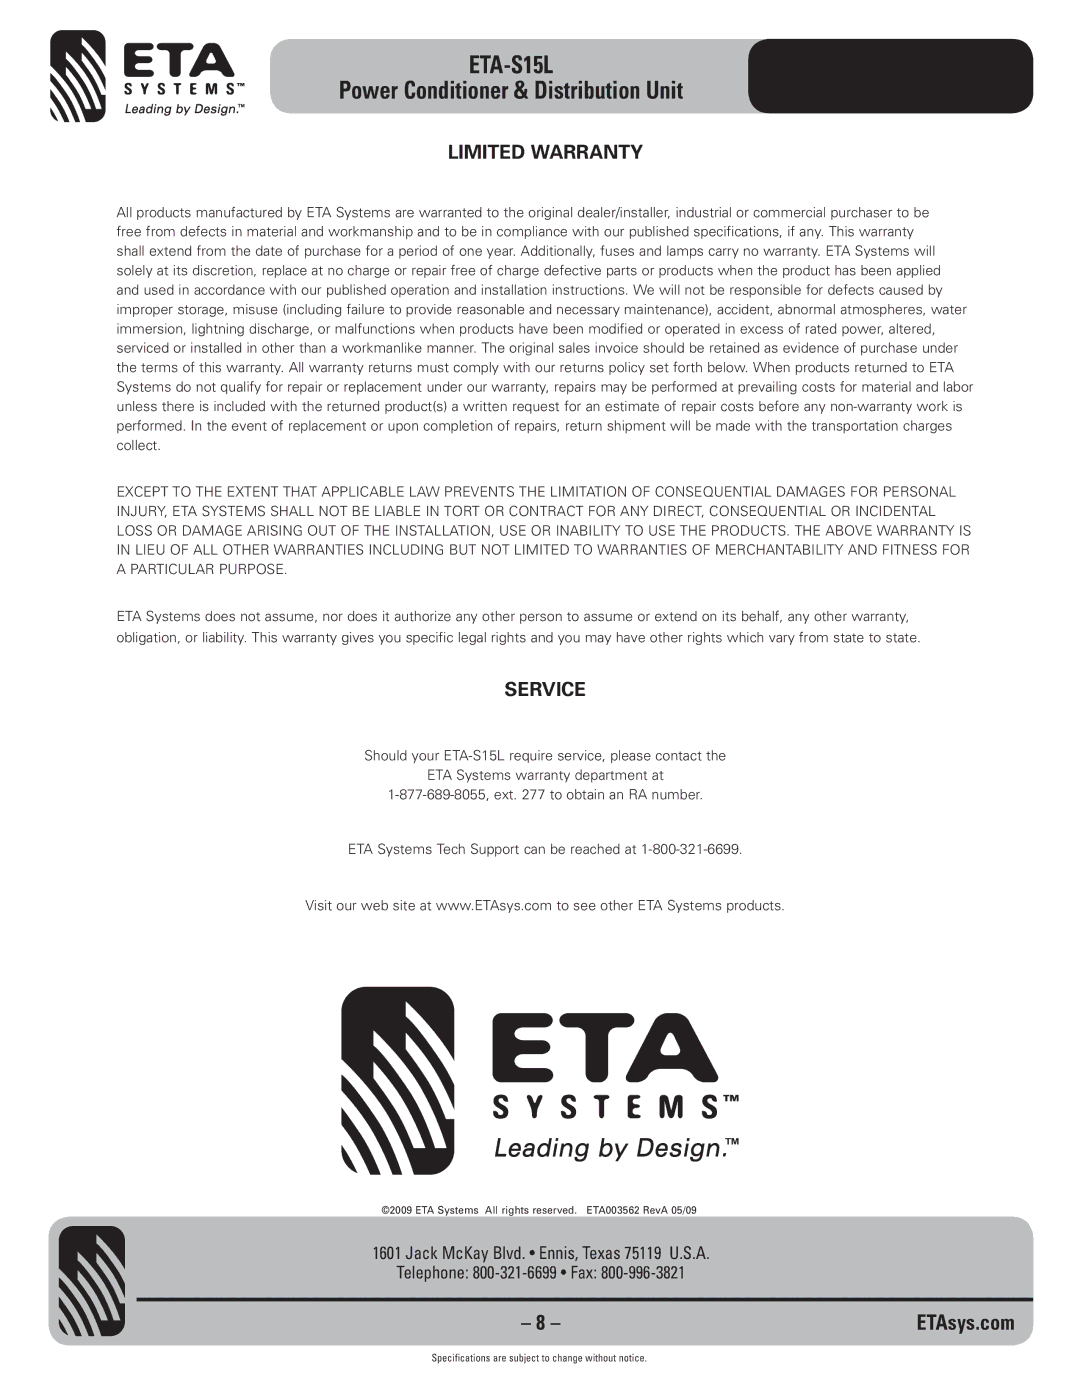 ETA Systems ETA-S15L specifications Limited Warranty, Service 